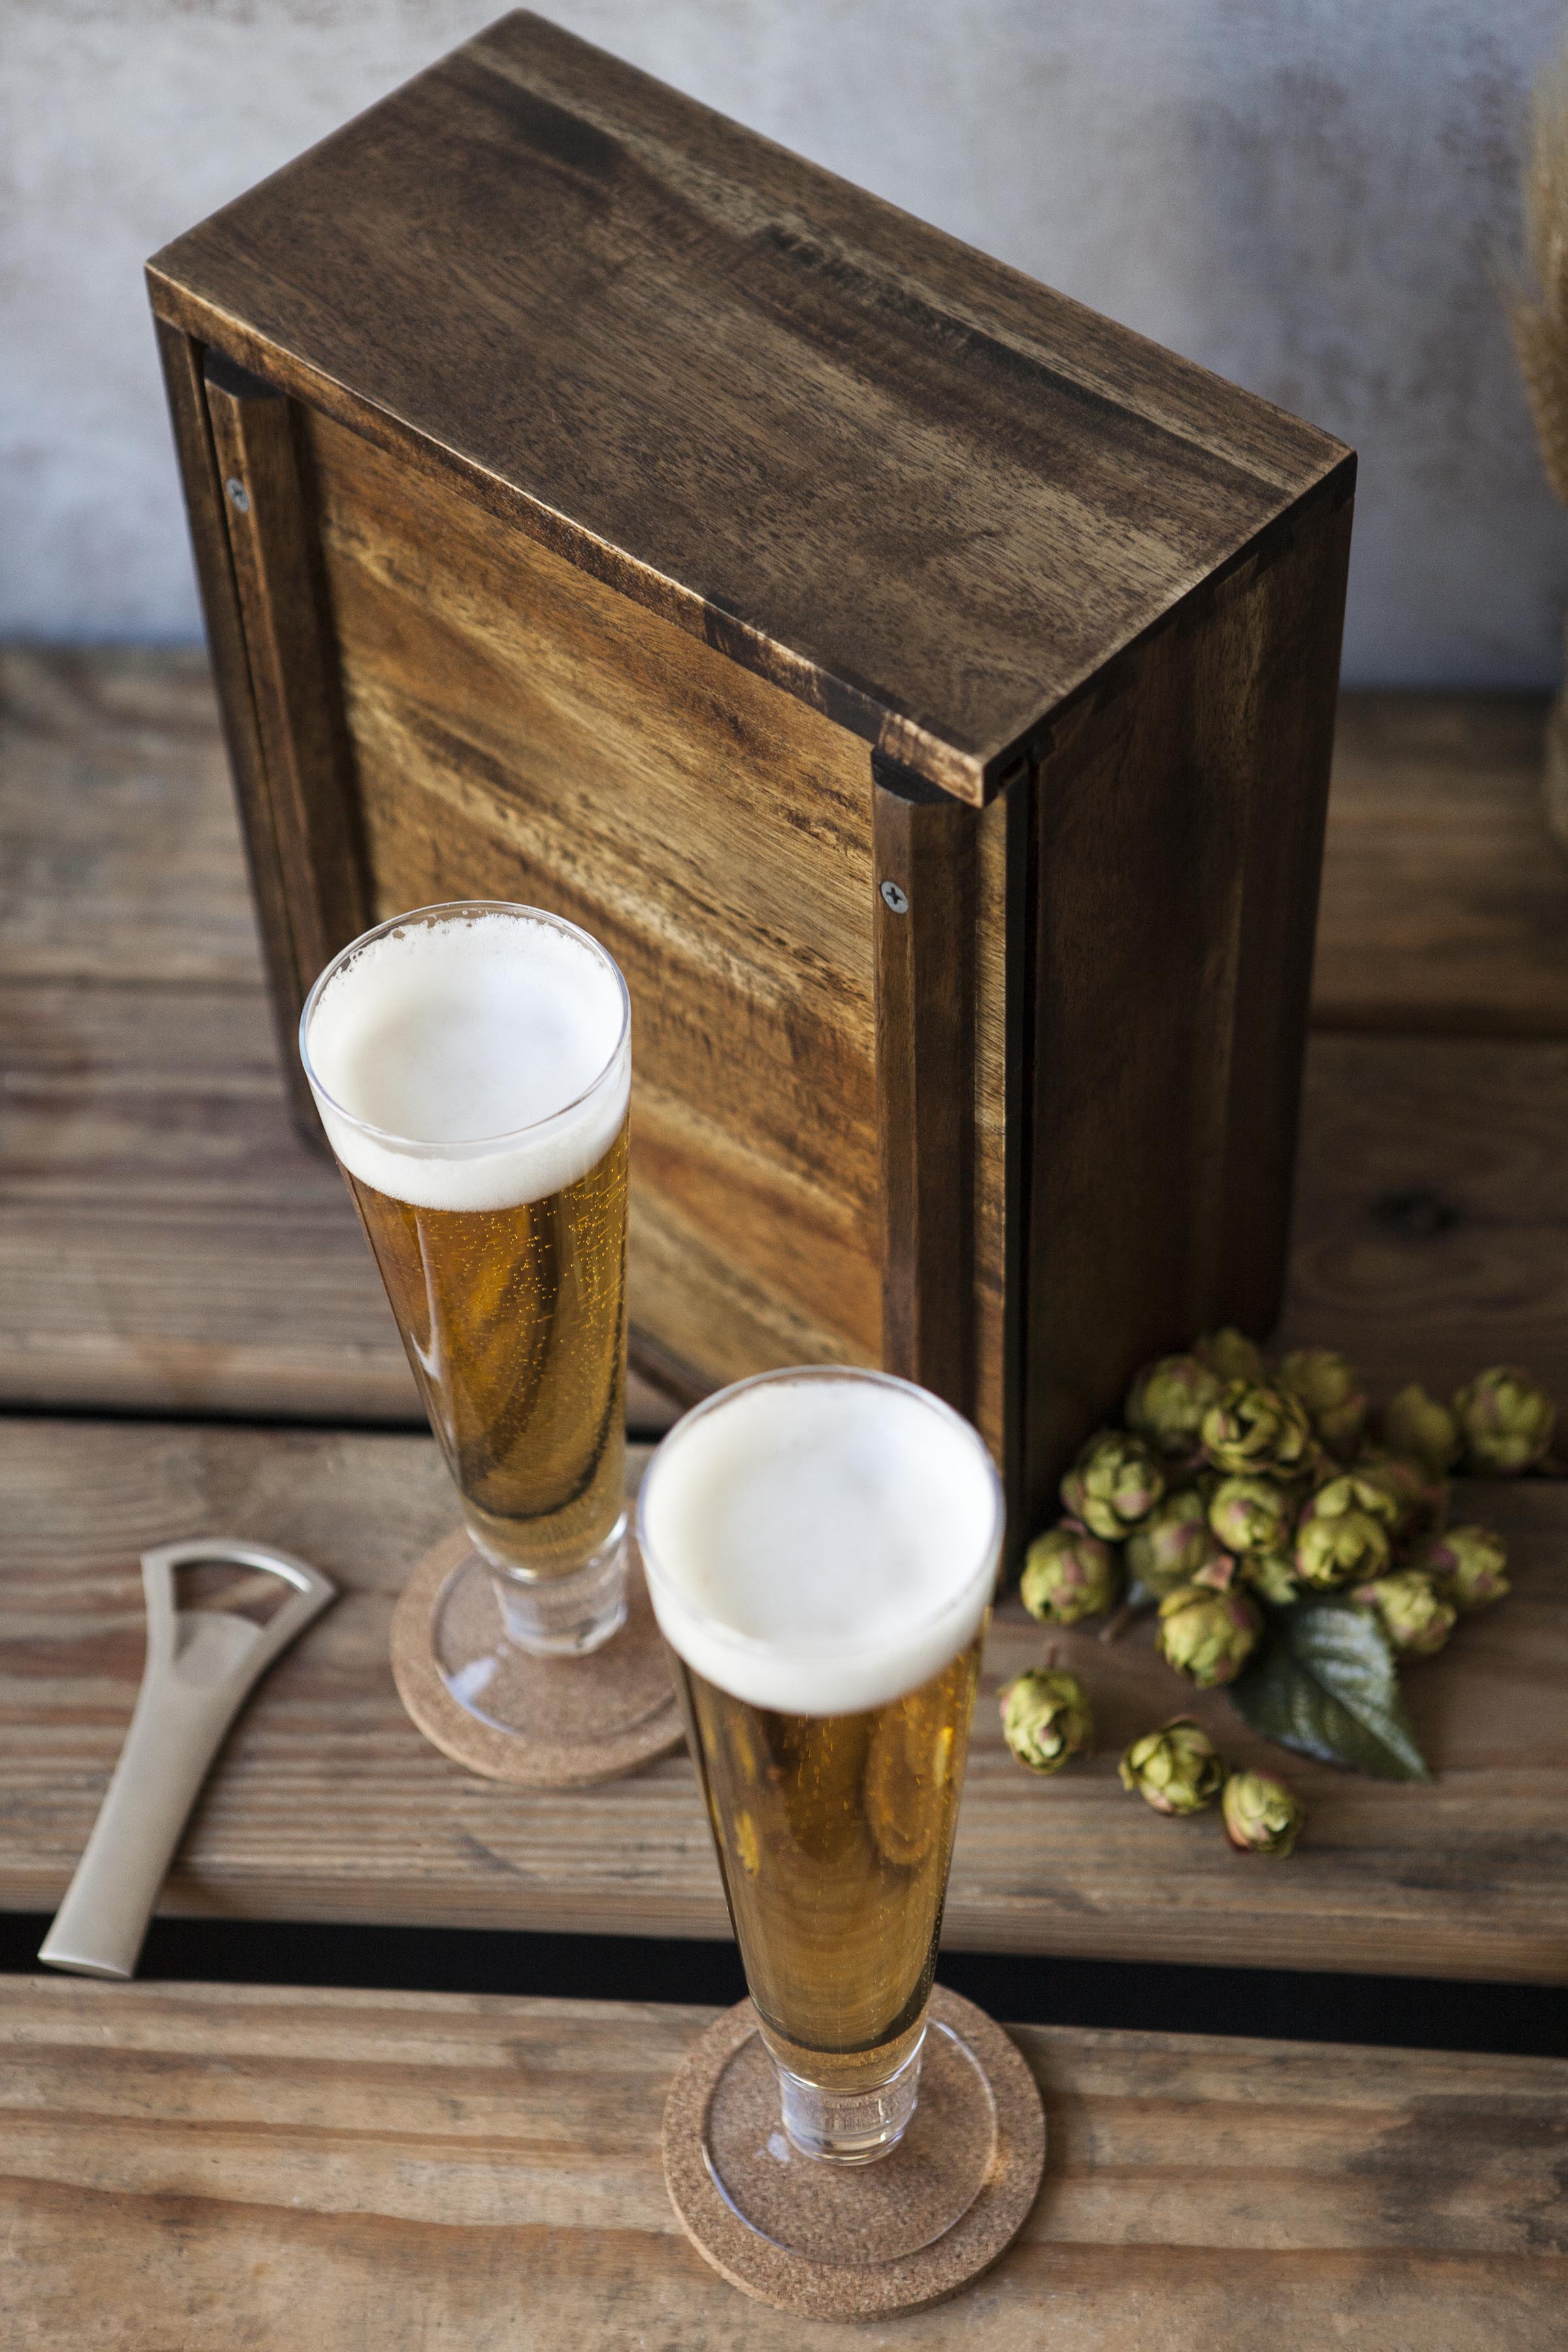 Pittsburgh Pirates - Pilsner Beer Glass Gift Set